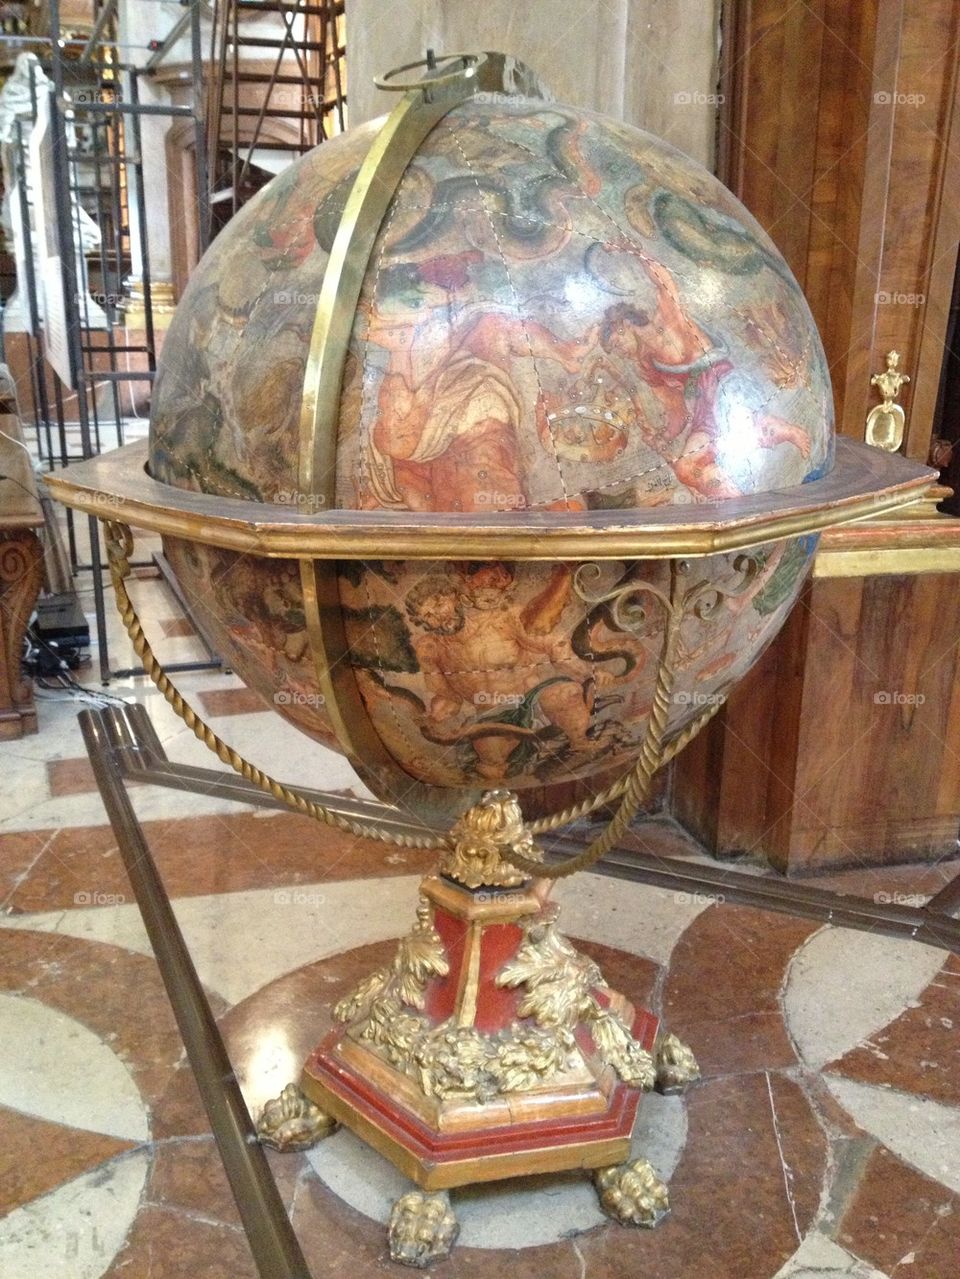 Painted Globe